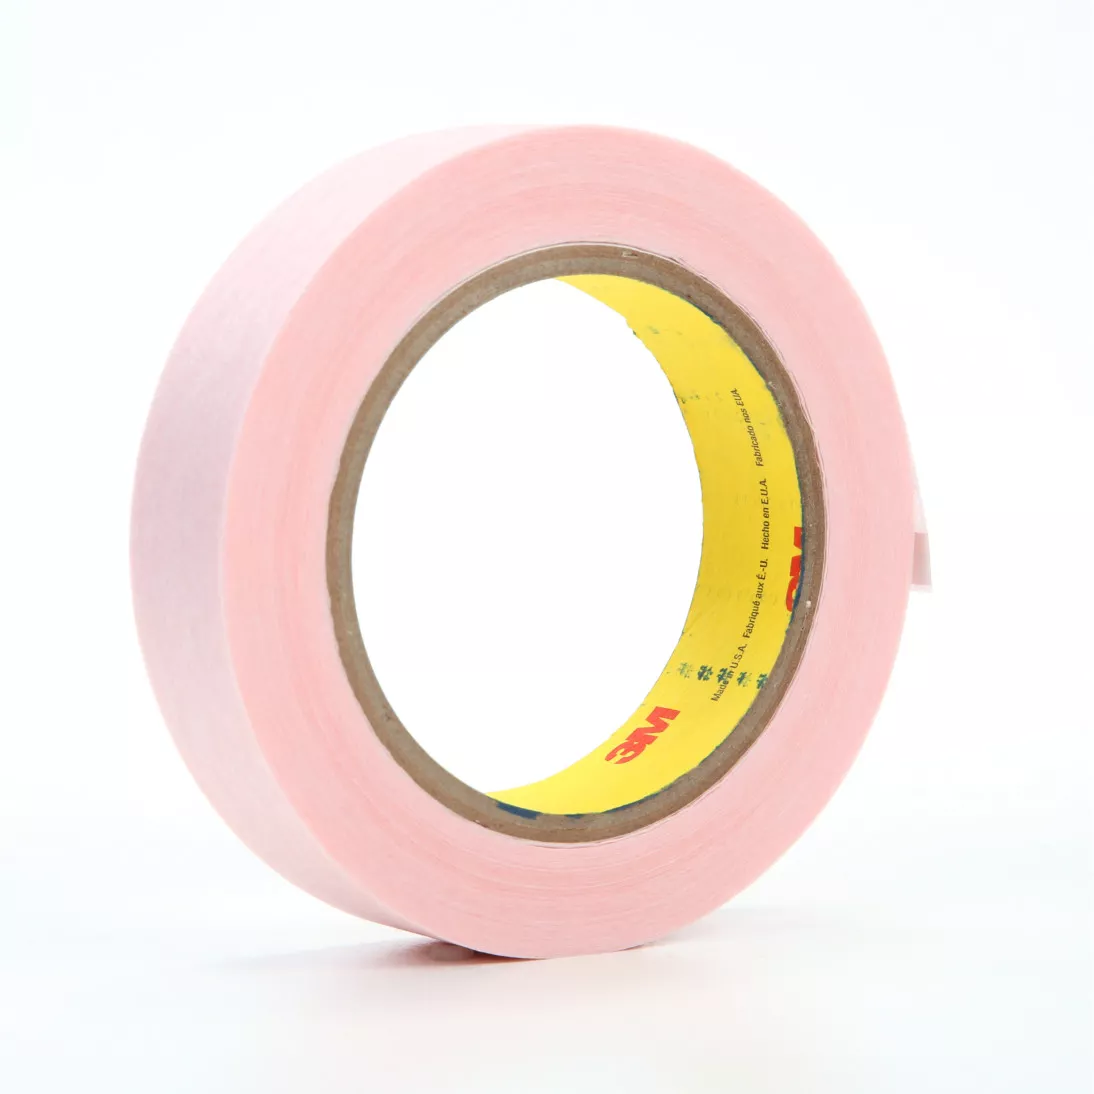 3M™ Venting Tape 3294, Pink, 1 in x 36 yd, 5 mil, 36 rolls per case